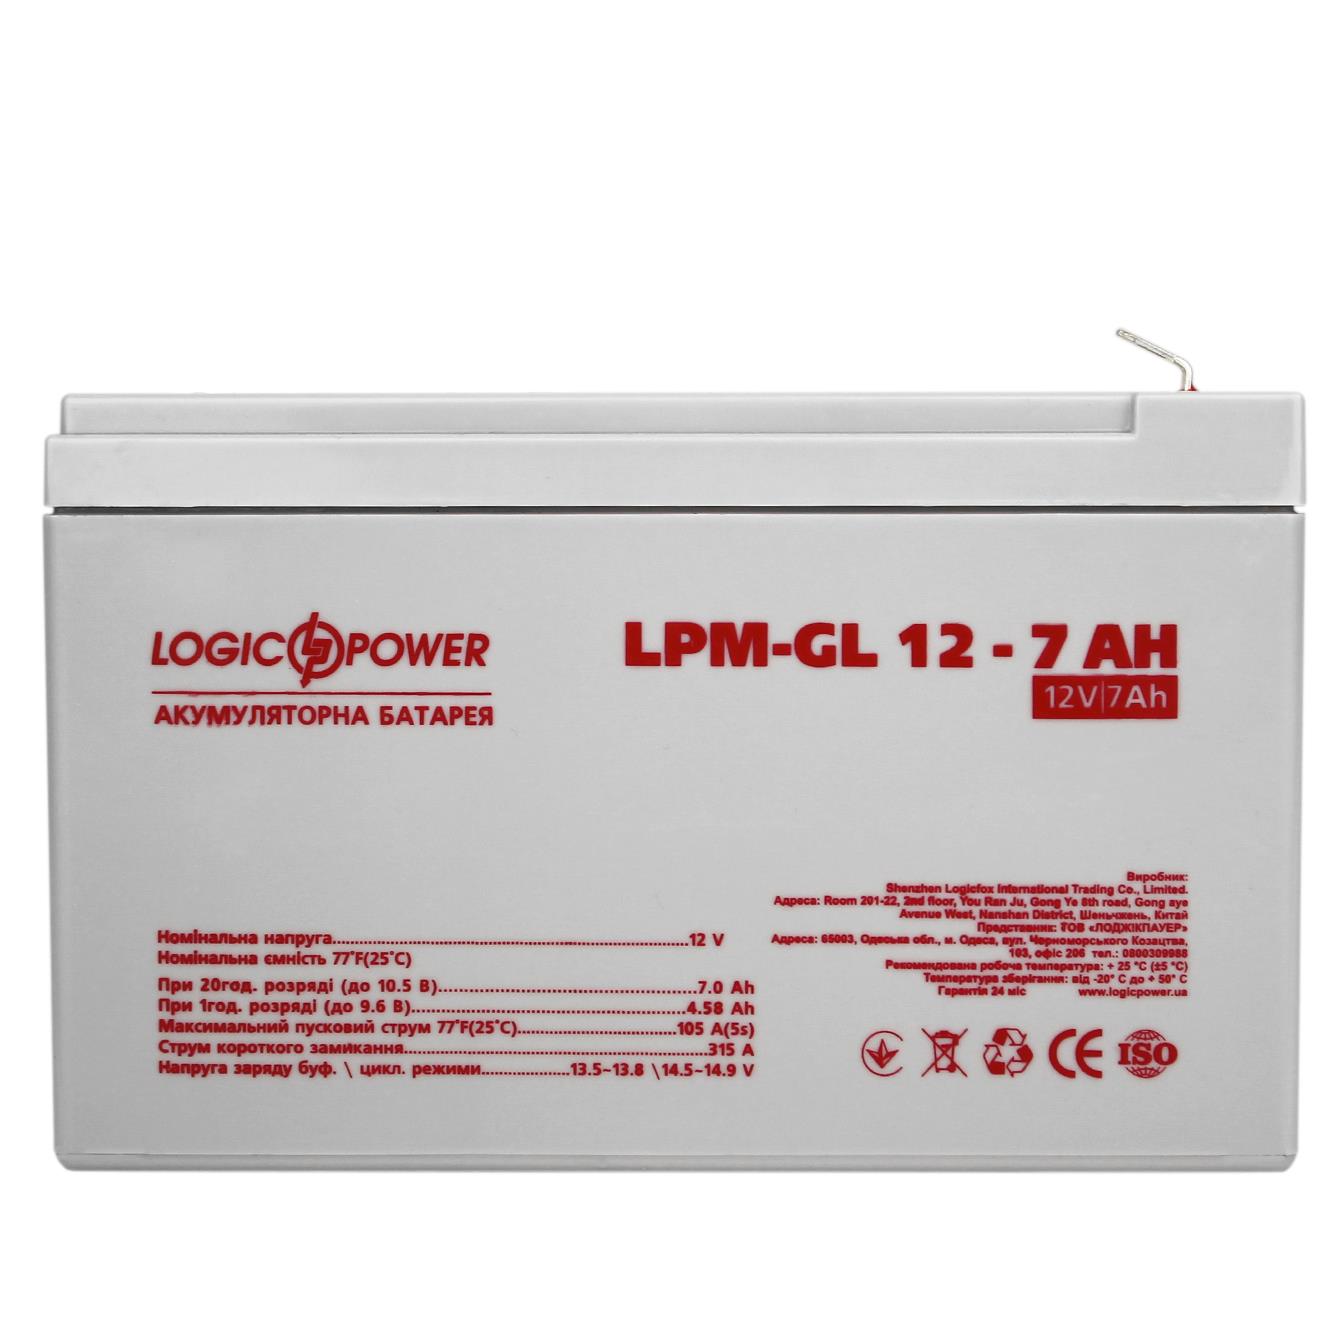 продаём LogicPower LPM-GL 12V - 7 Ah (6560) в Украине - фото 4